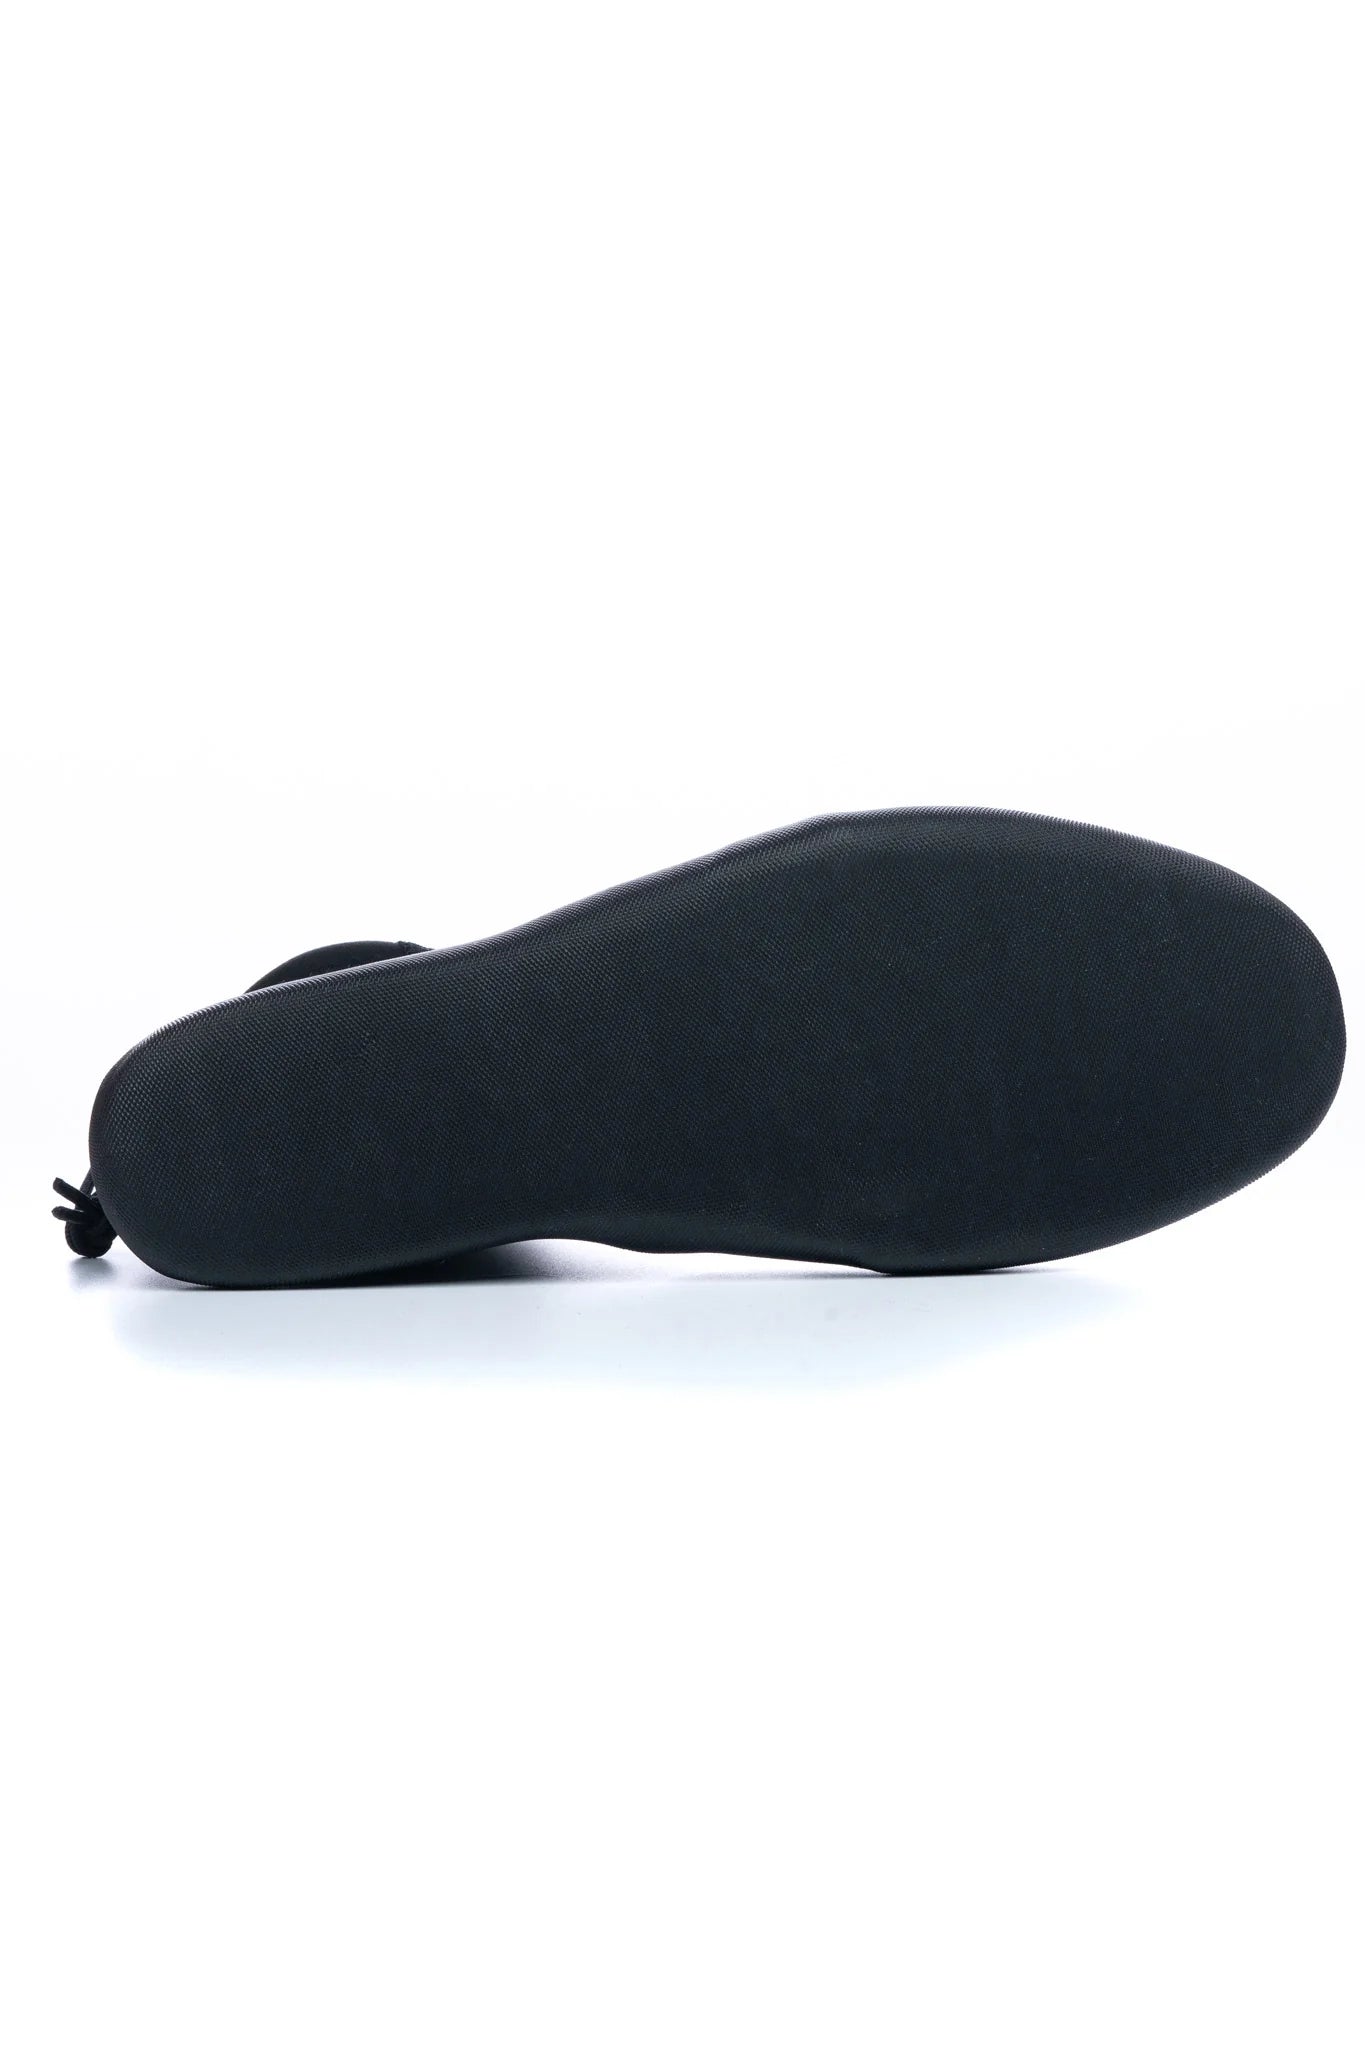 C-Skins Legend 3mm Adult Round Toe Slipper - Black / Charcoal